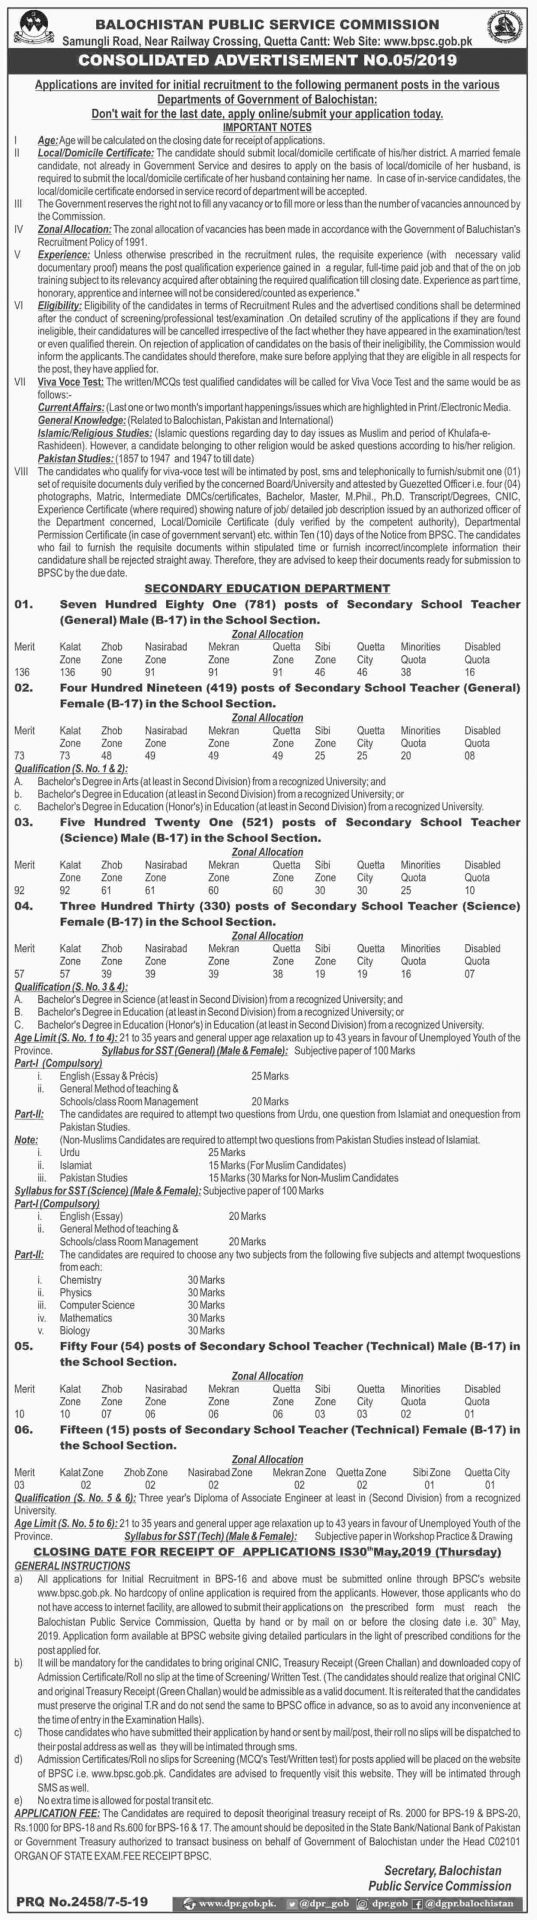 BPSC Education Department Balochistan Jobs 2019 Male Female Teachers Form Last Date